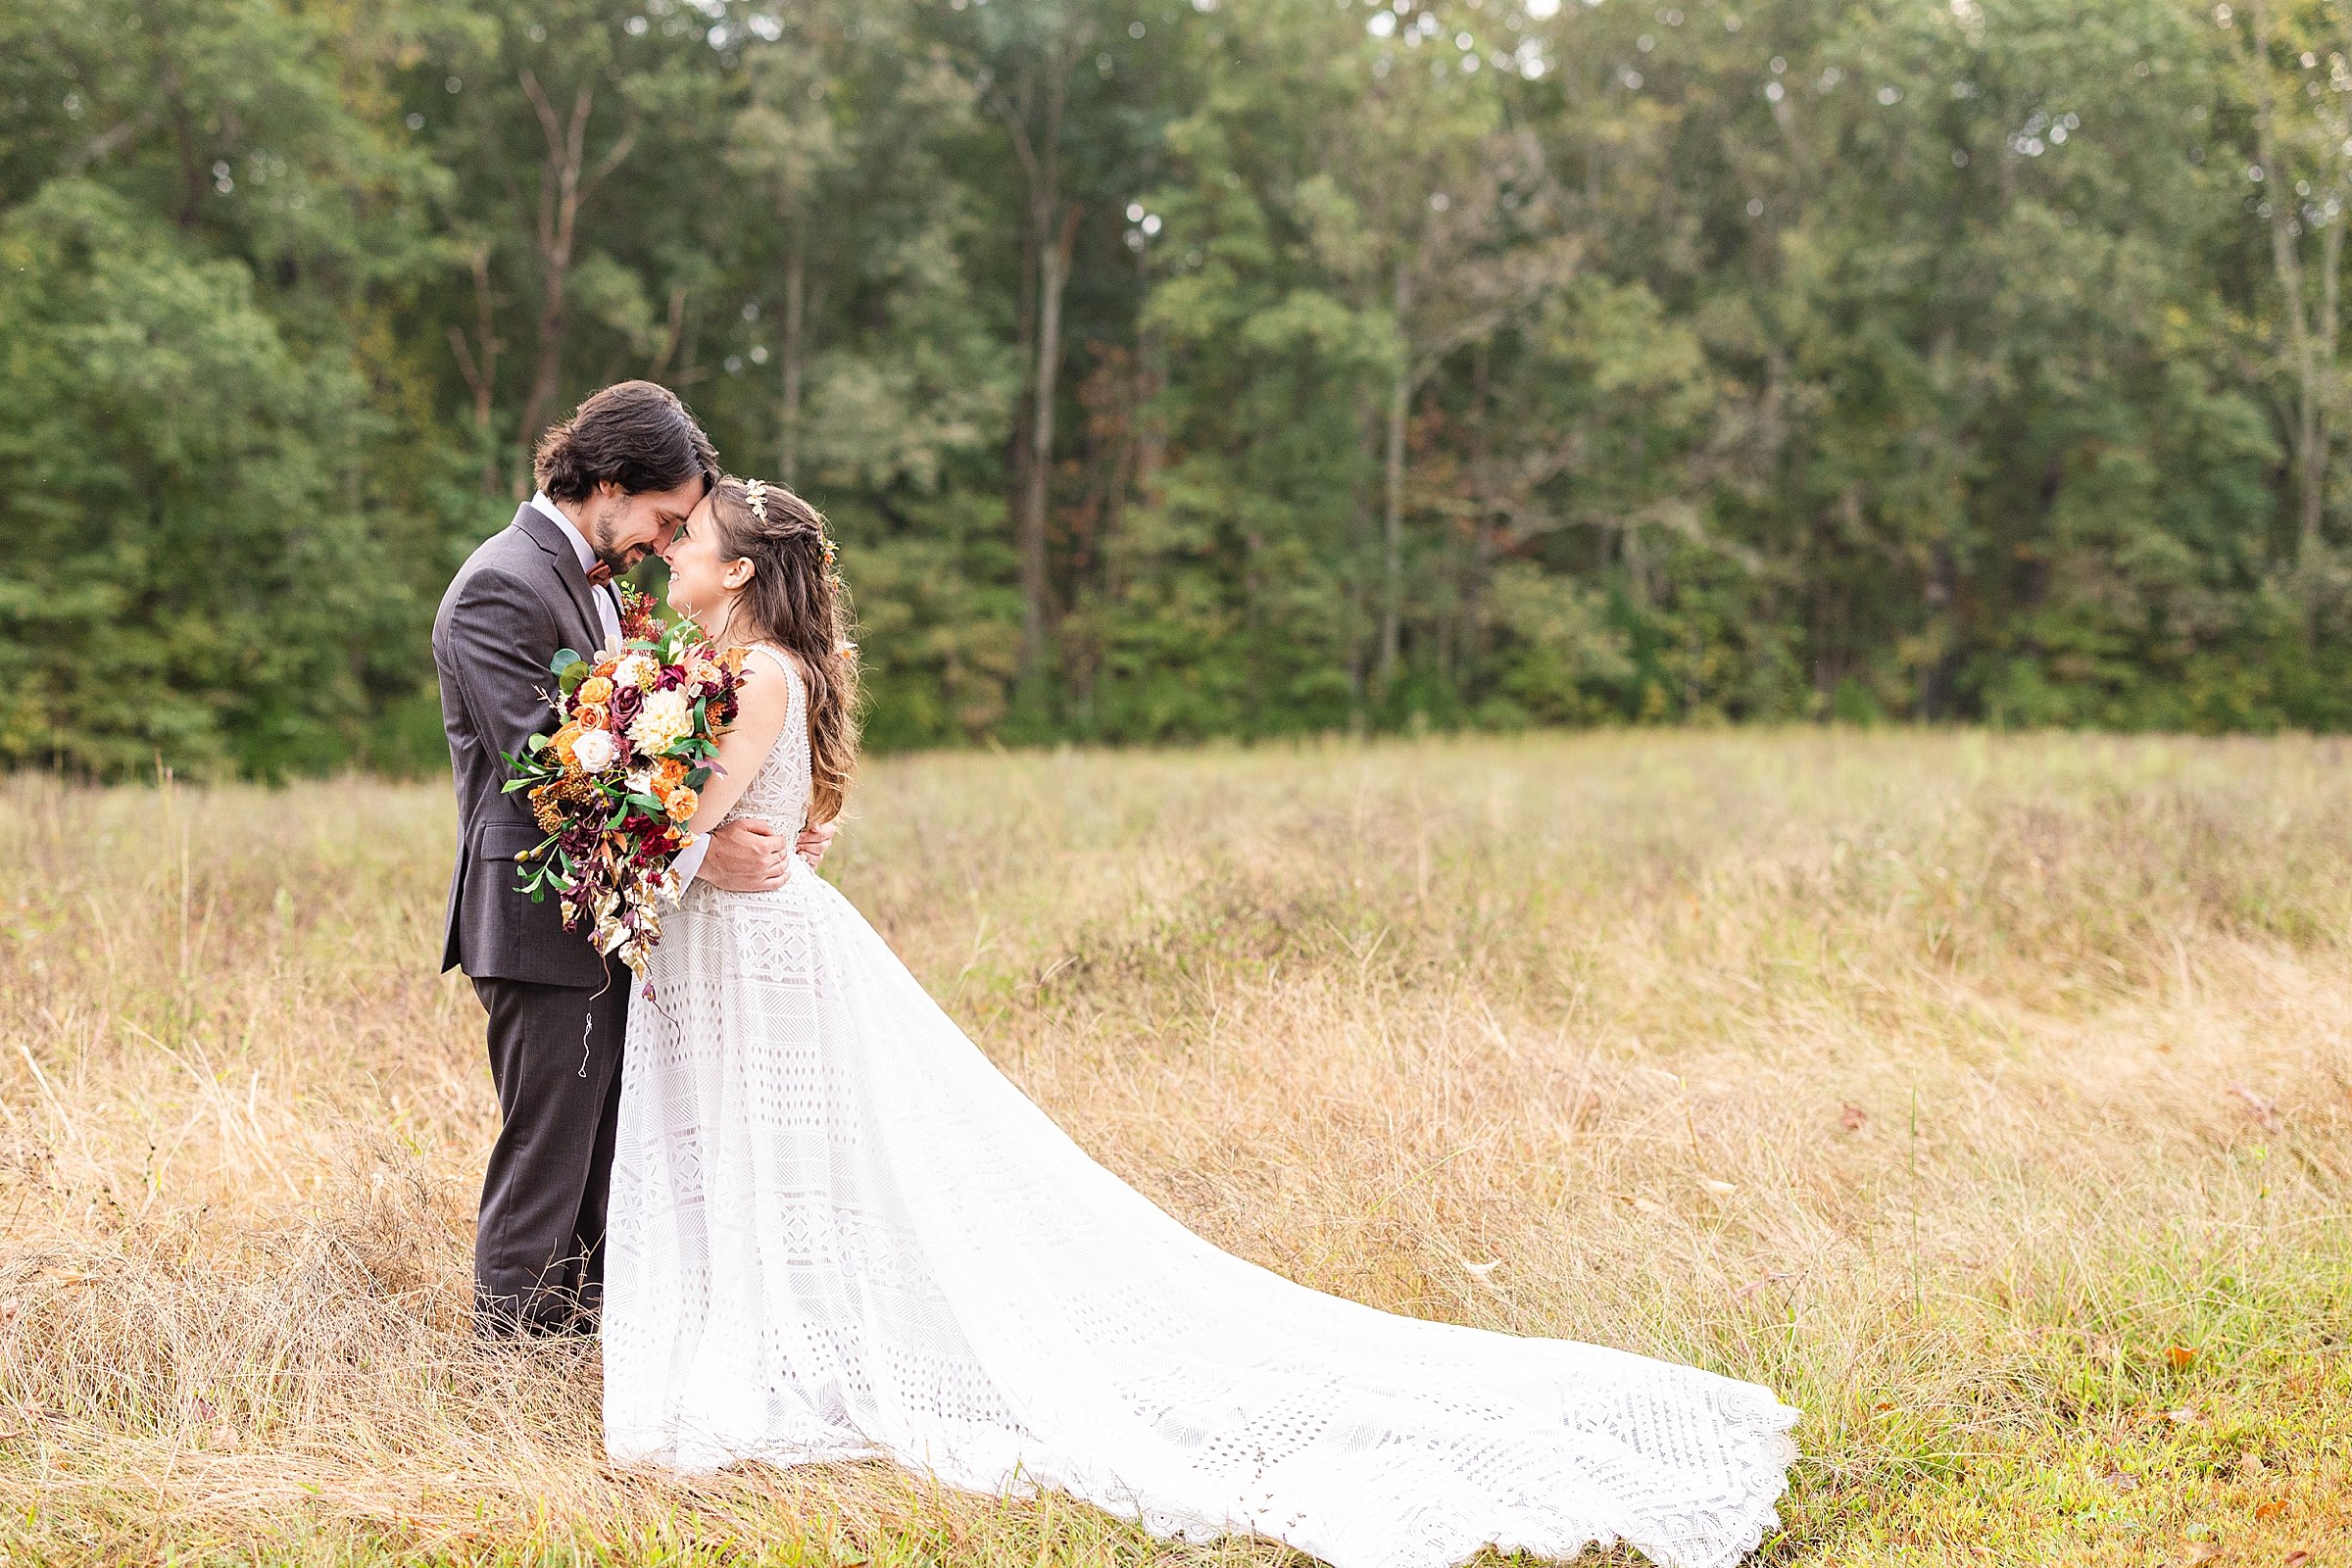 Tim + Caroline | Fall Boho Wedding at Avonlea Farms